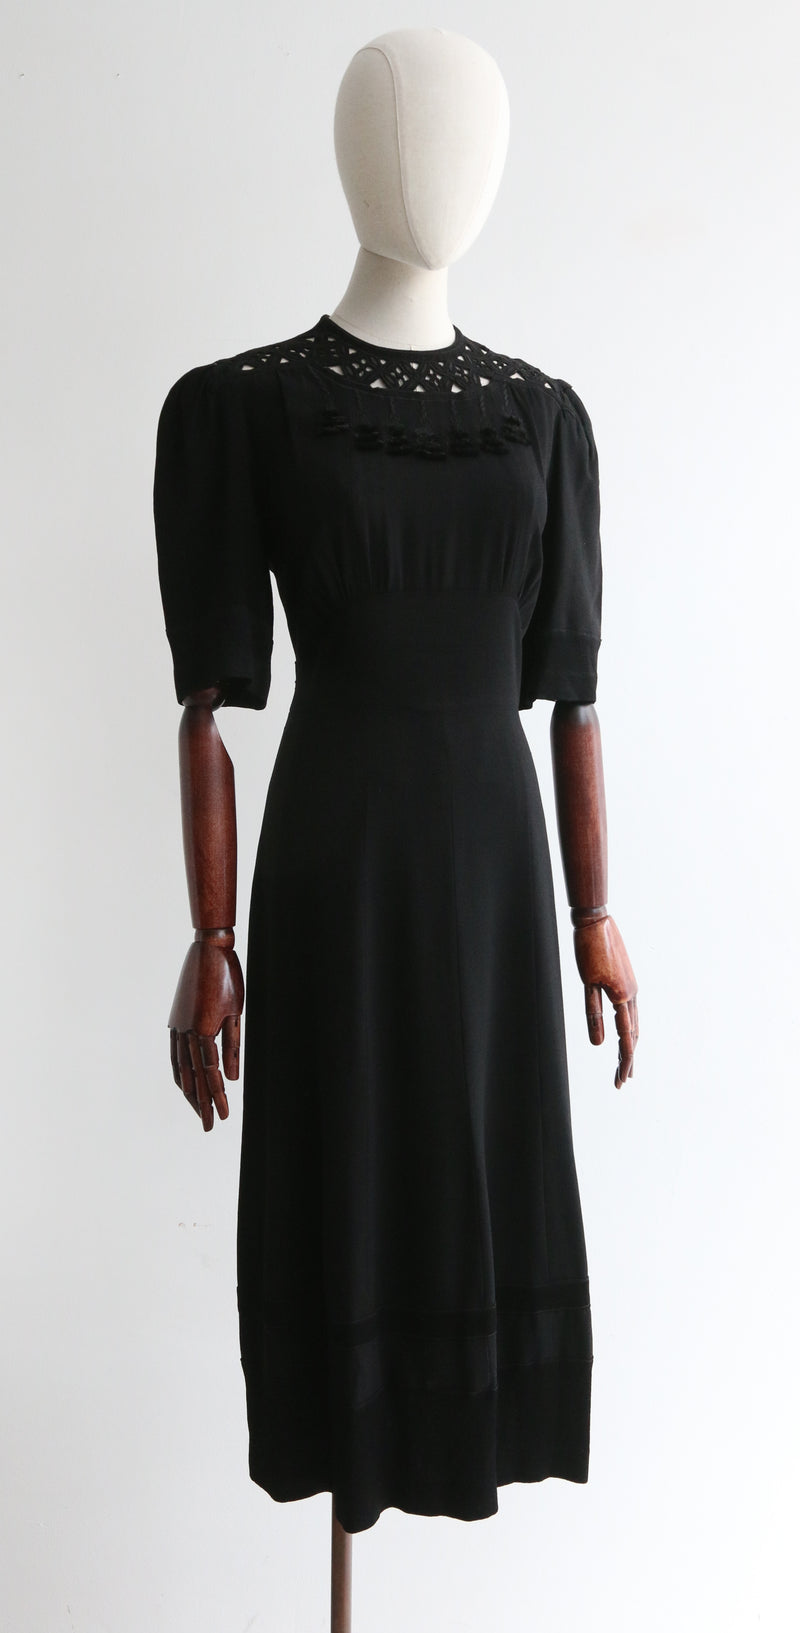 "Border of Tassels" Vintage 1940's Black Crepe Silk Dress UK 12 US 8